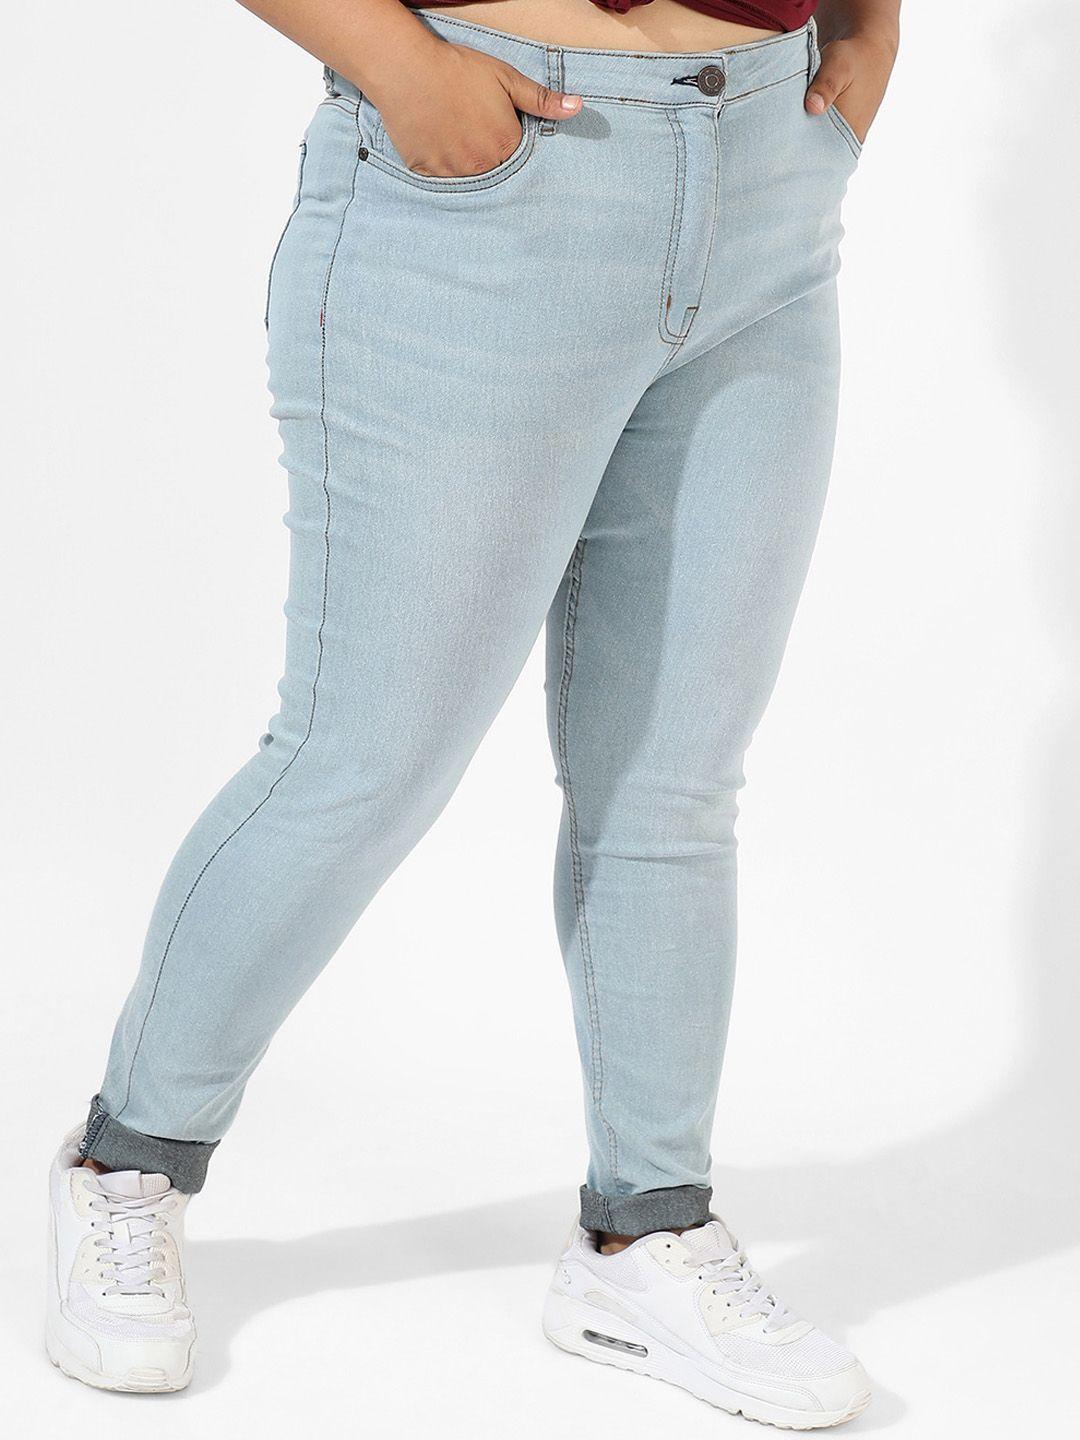 instafab plus size women jean skinny fit mid rise cotton jeans